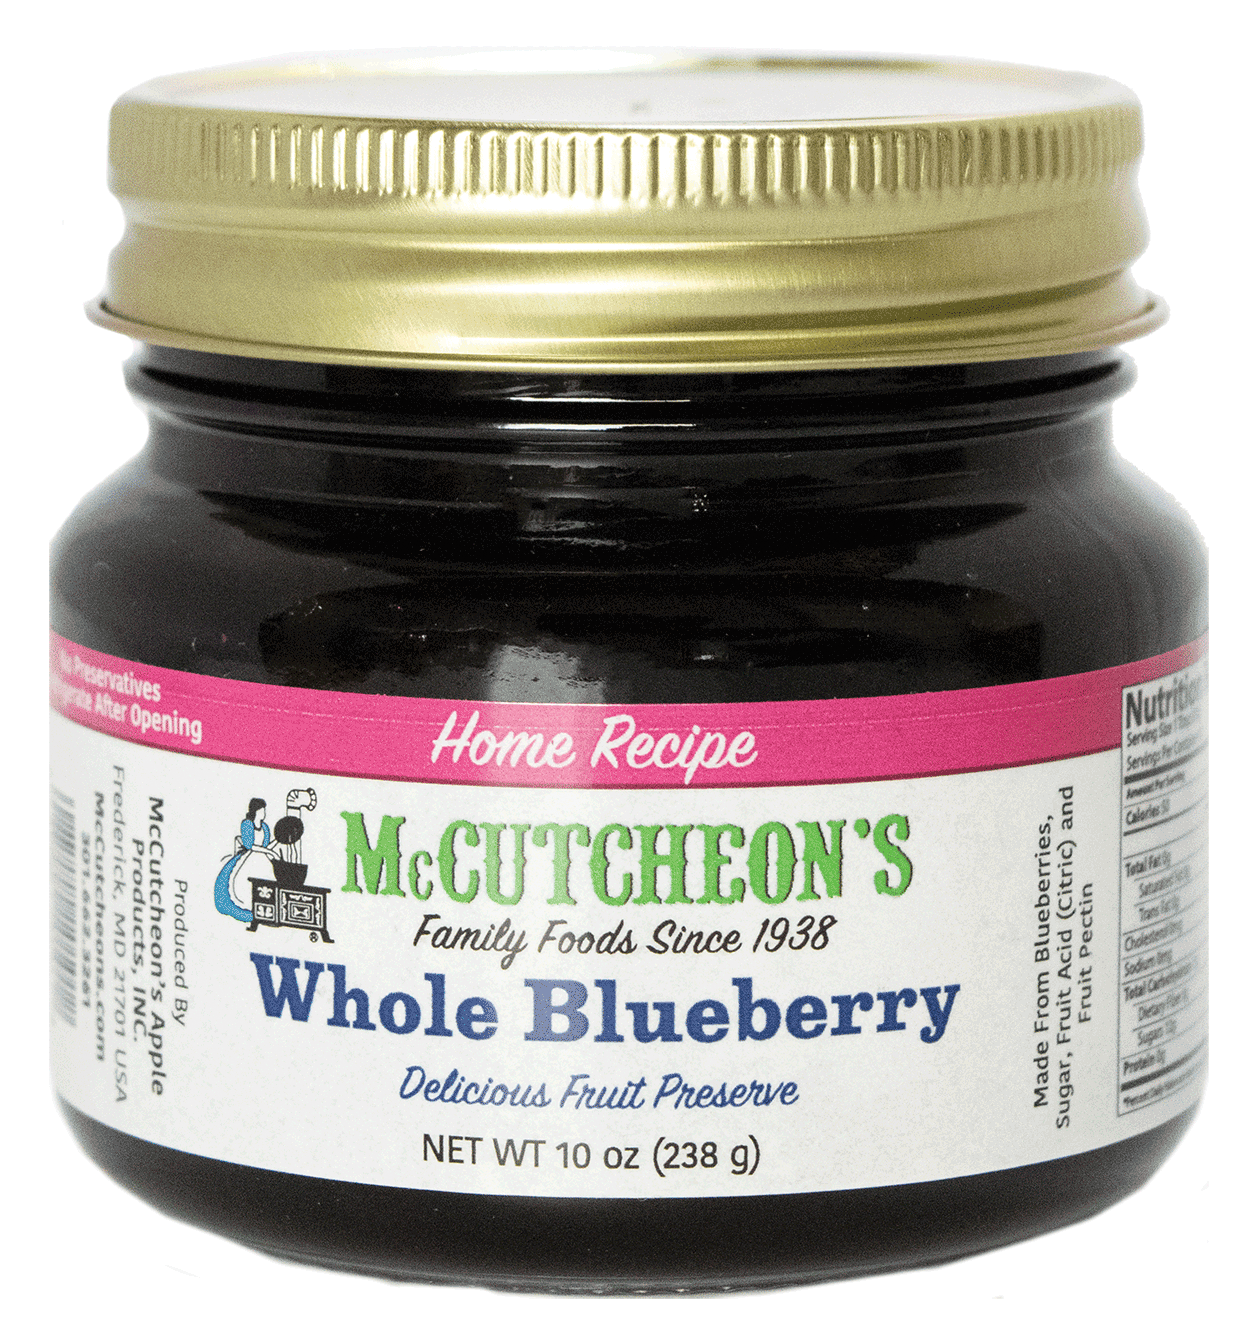 jar of McCutcheon's mini whole blueberry preserves